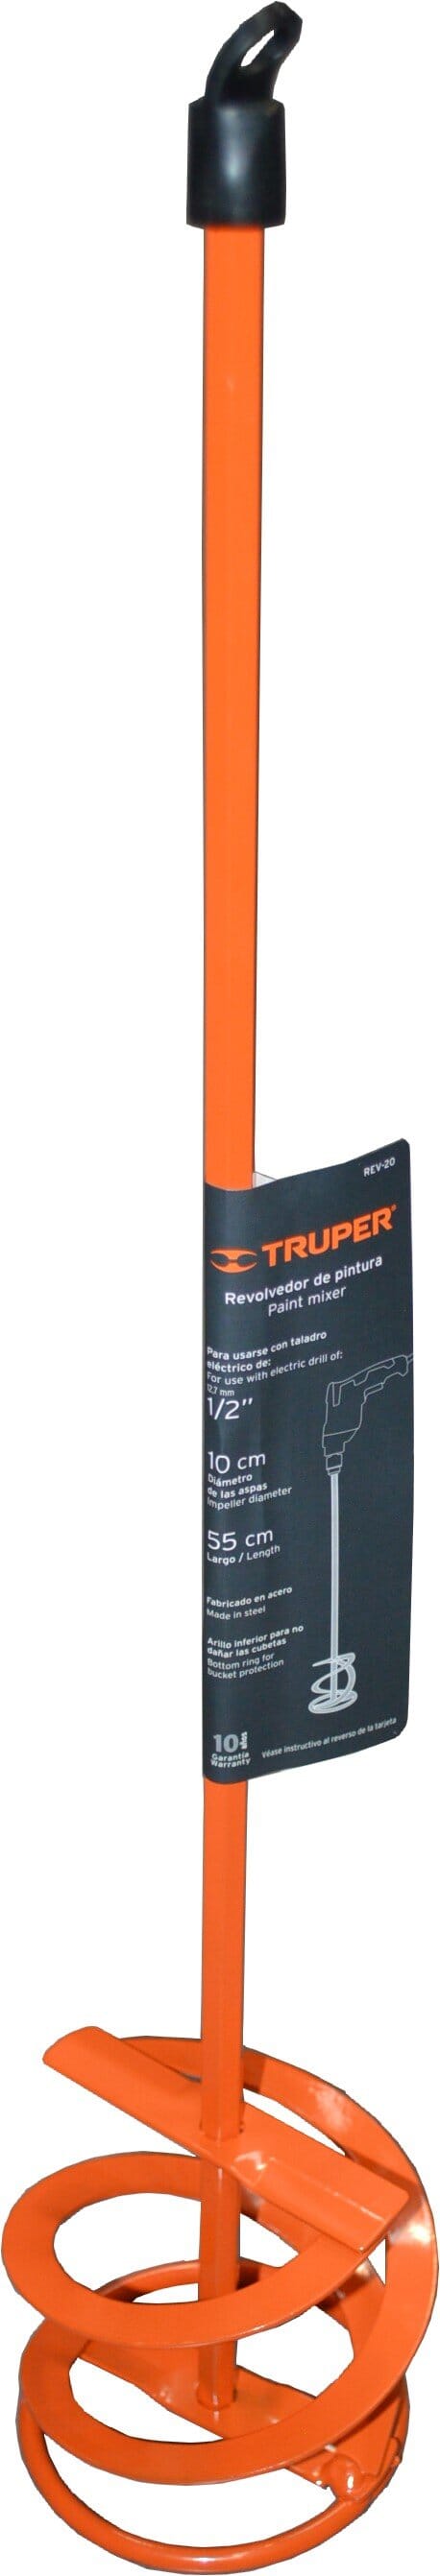 Truper Paint Mixer Steel 100x600mm